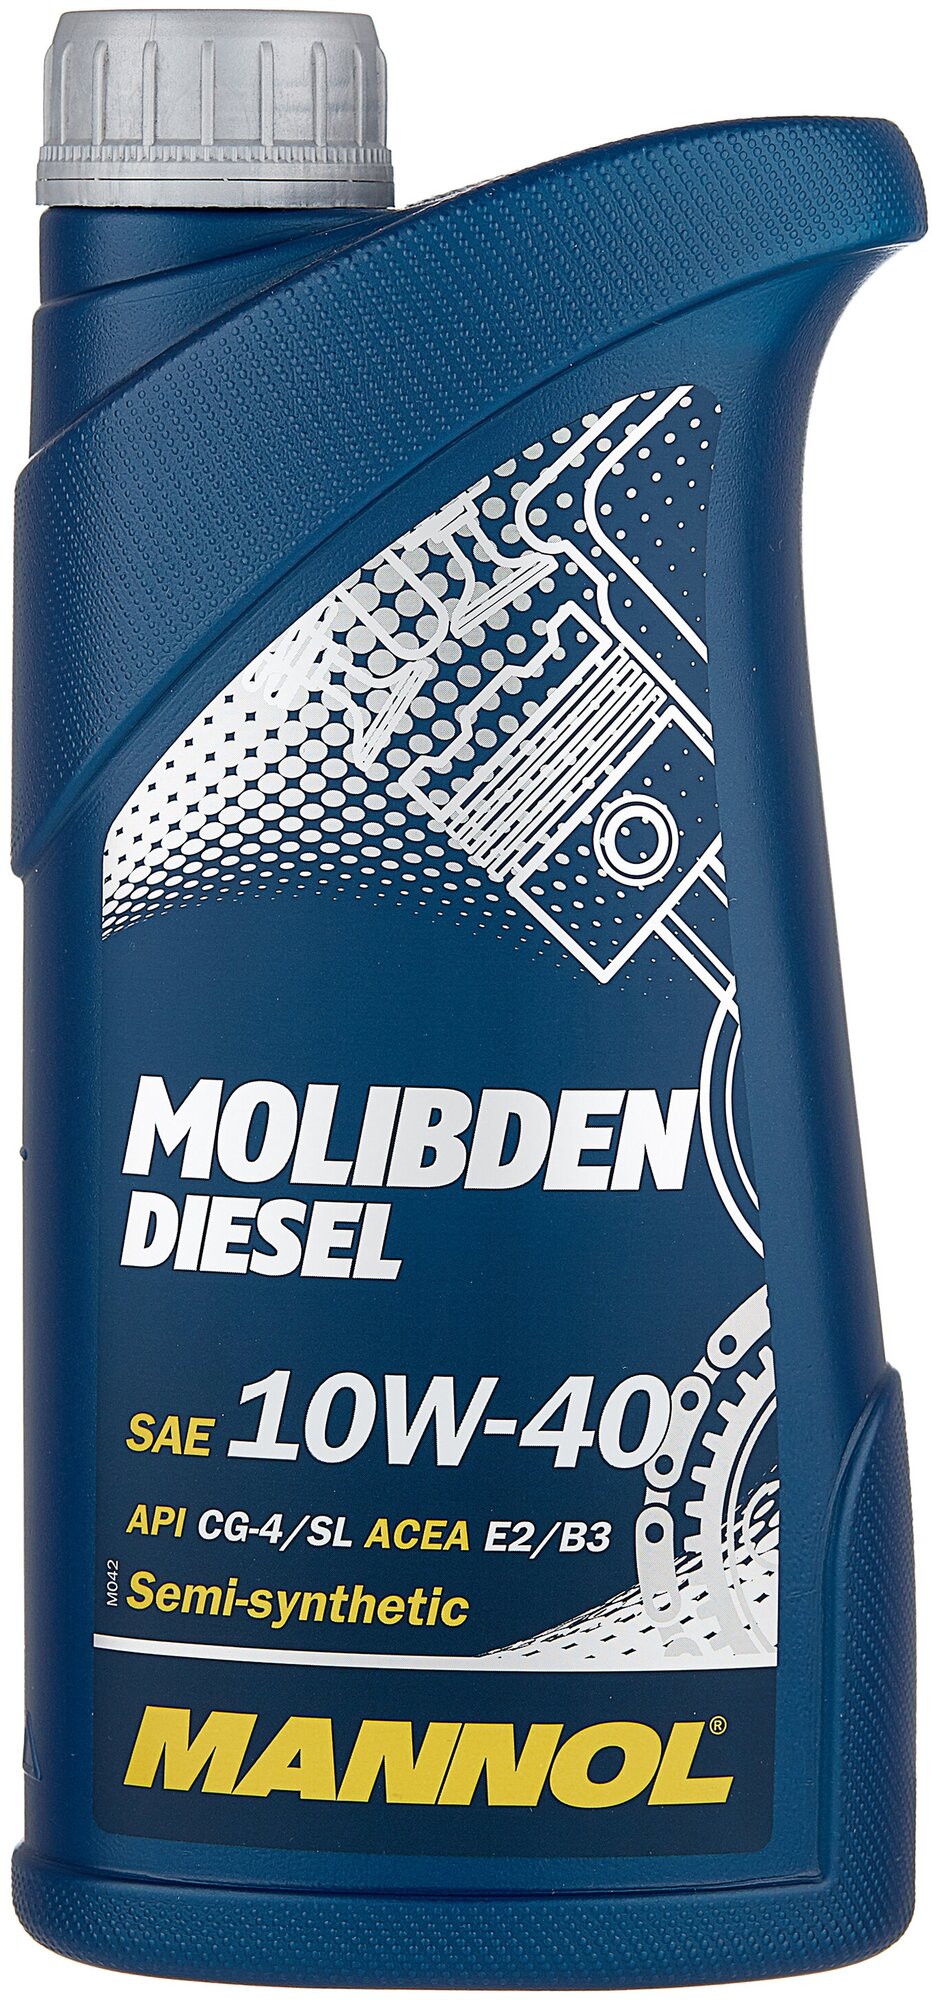 Полусинтетическое моторное масло Mannol Molibden Diesel 10W-40